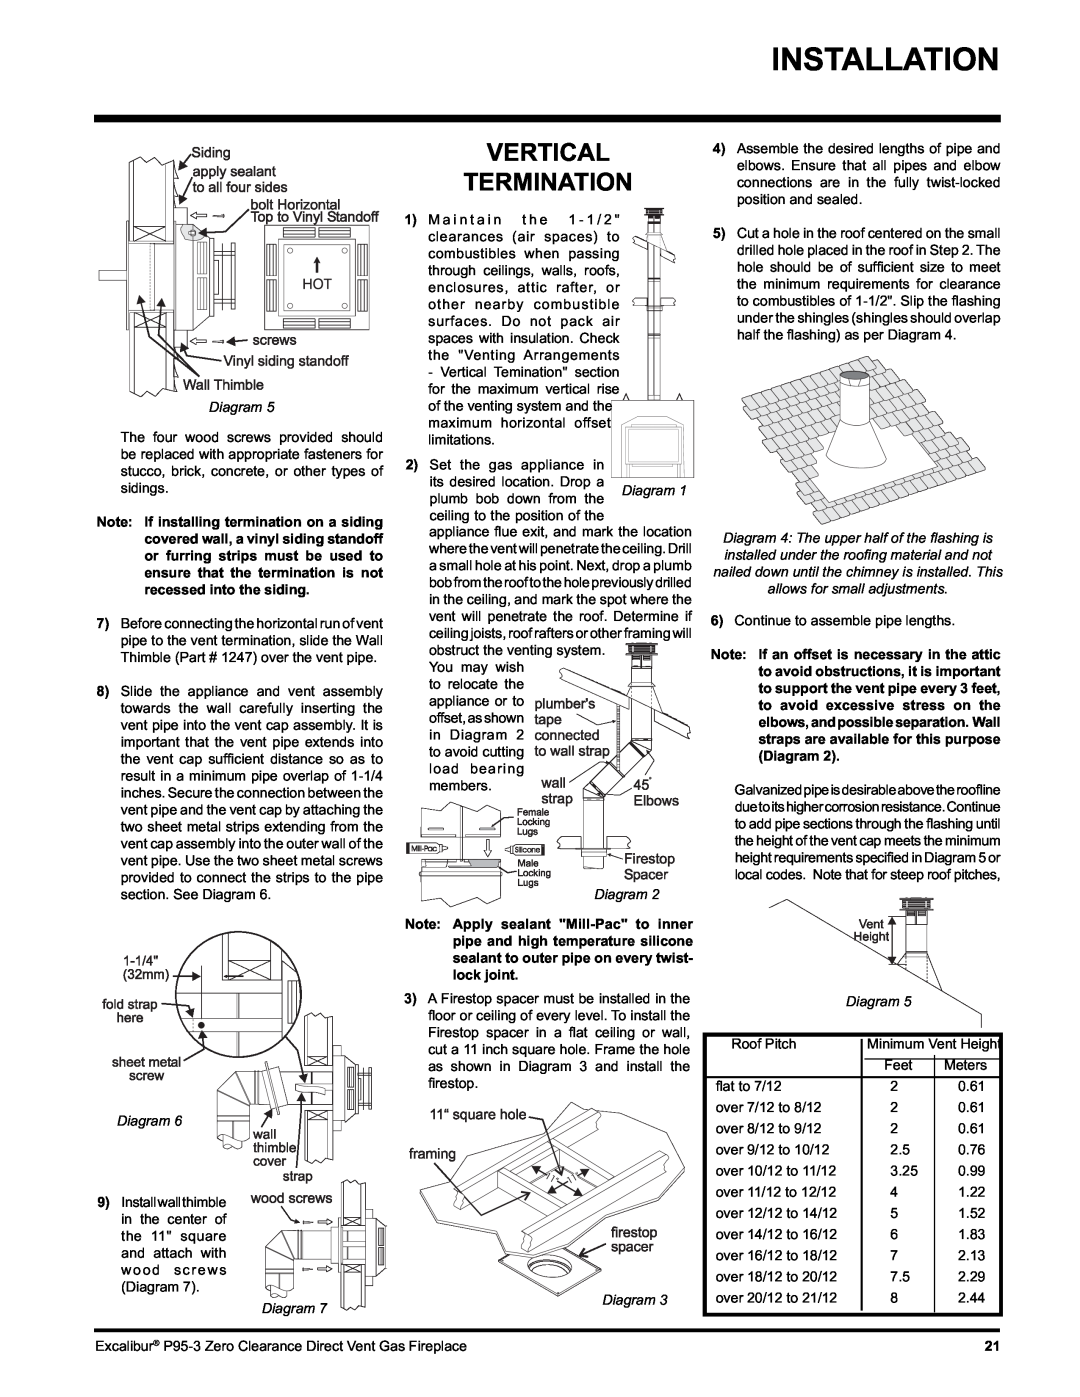 Excalibur electronic P95-LP3, P95-NG3 installation manual Installation, Vertical Termination, Diagram 